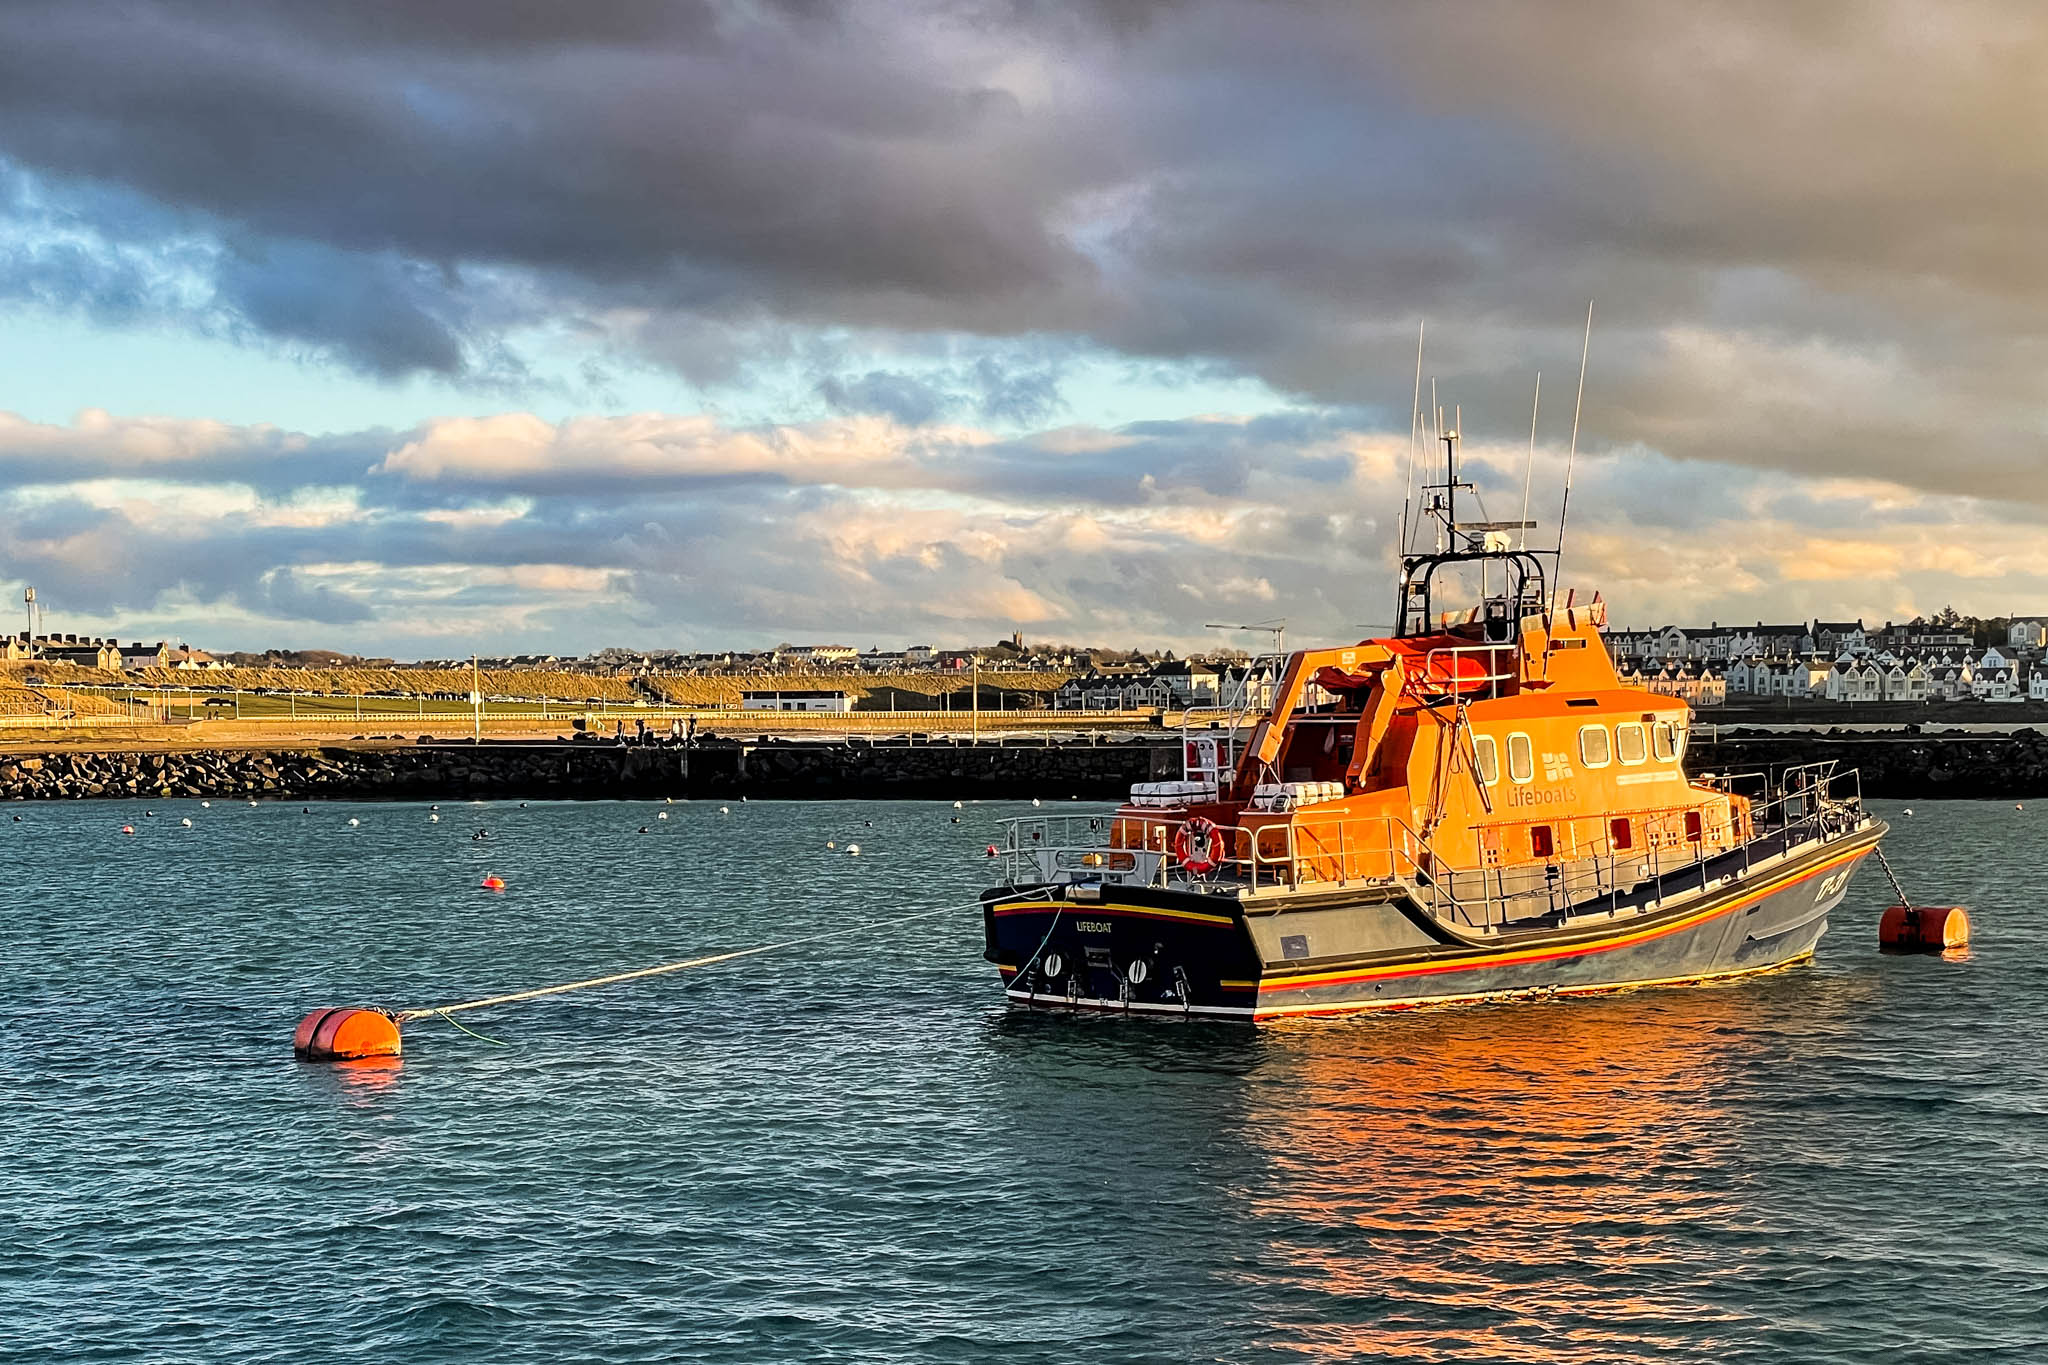 RNLI Lifeboat near Belfast